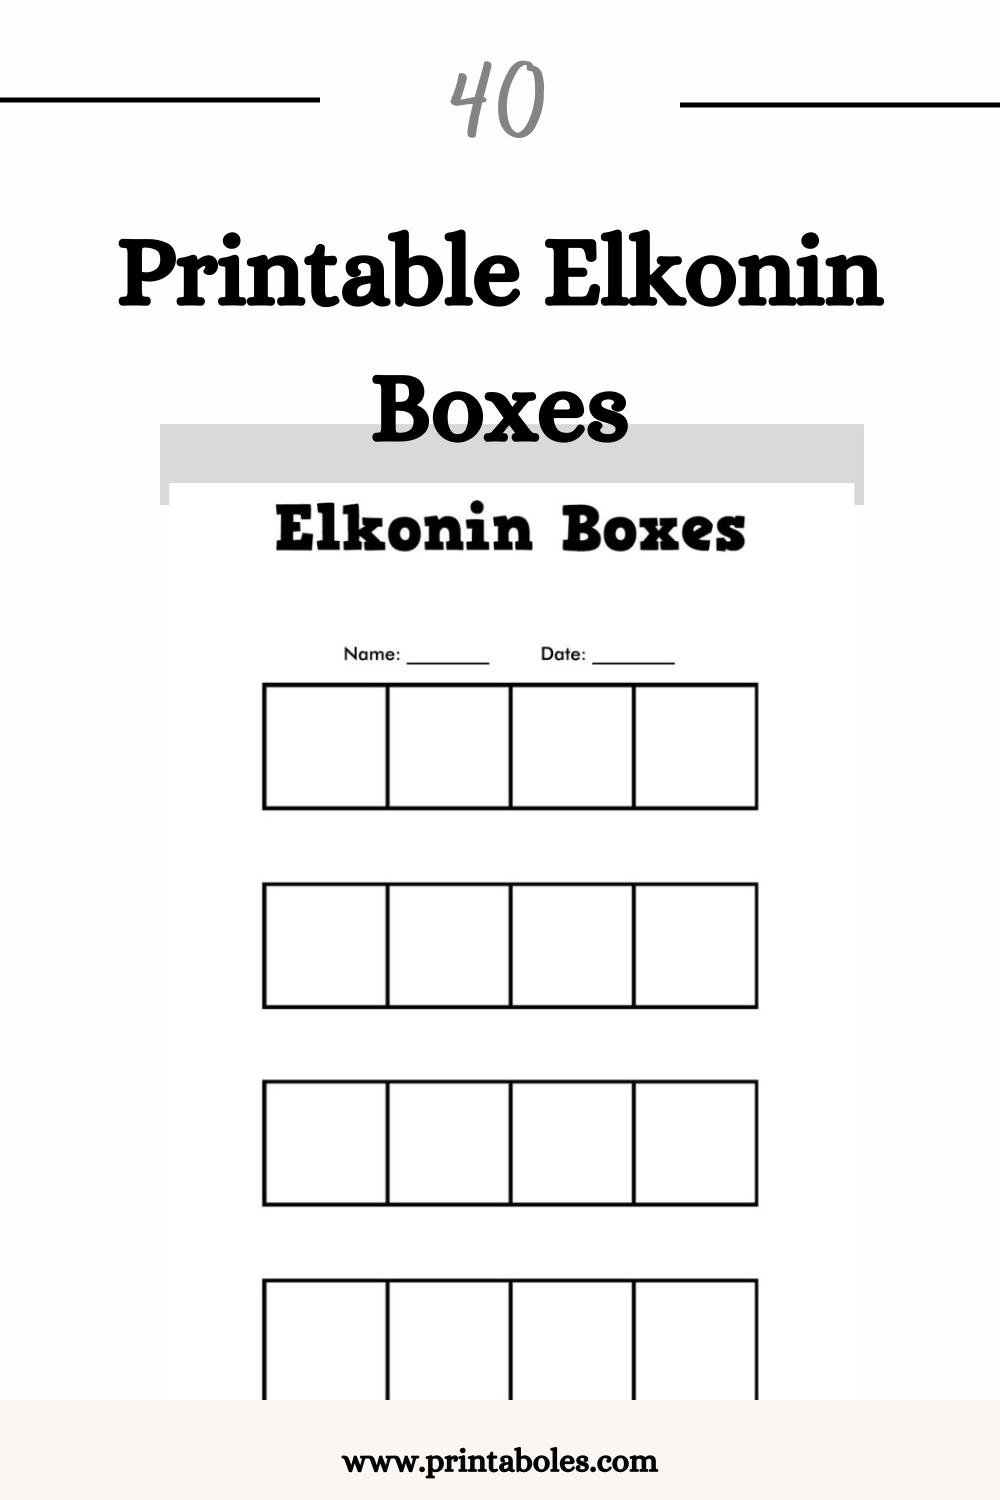 Printable Elkonin Boxes